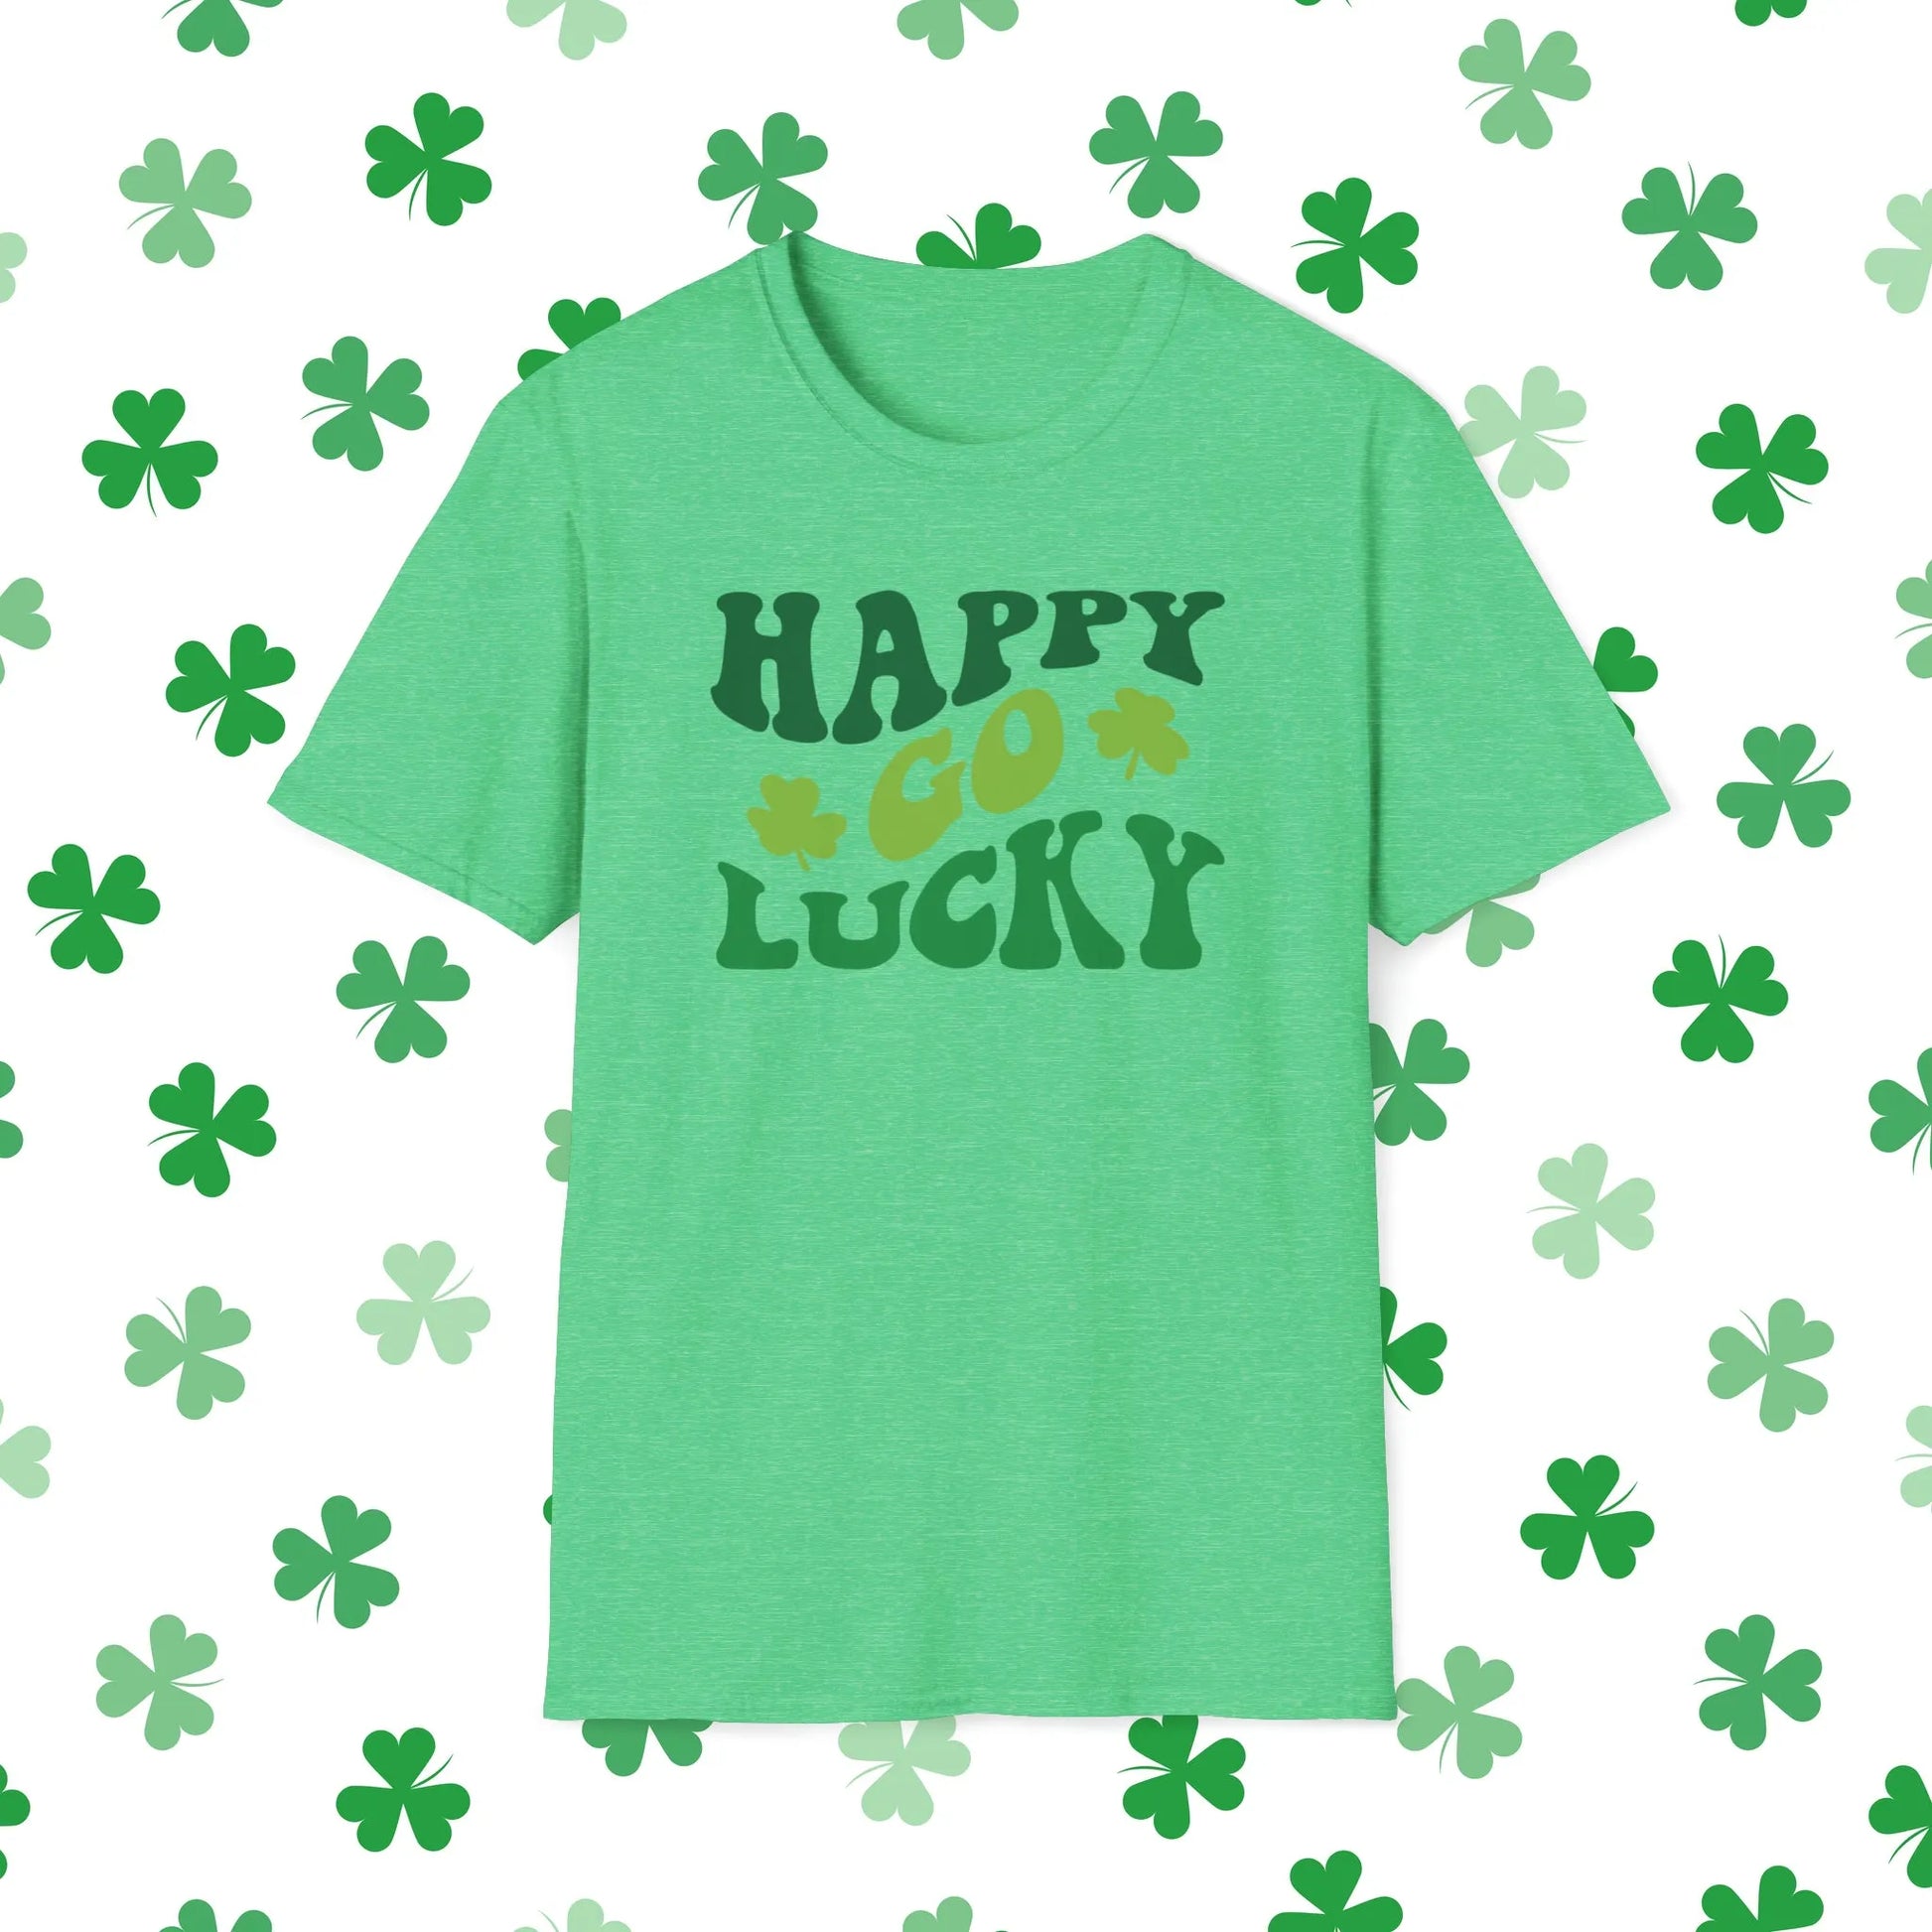 Happy Go Lucky Retro-Style St. Patrick's Day T-Shirt - Comfort & Charm - Happy Go Lucky St. Patrick's Day Shirt Green